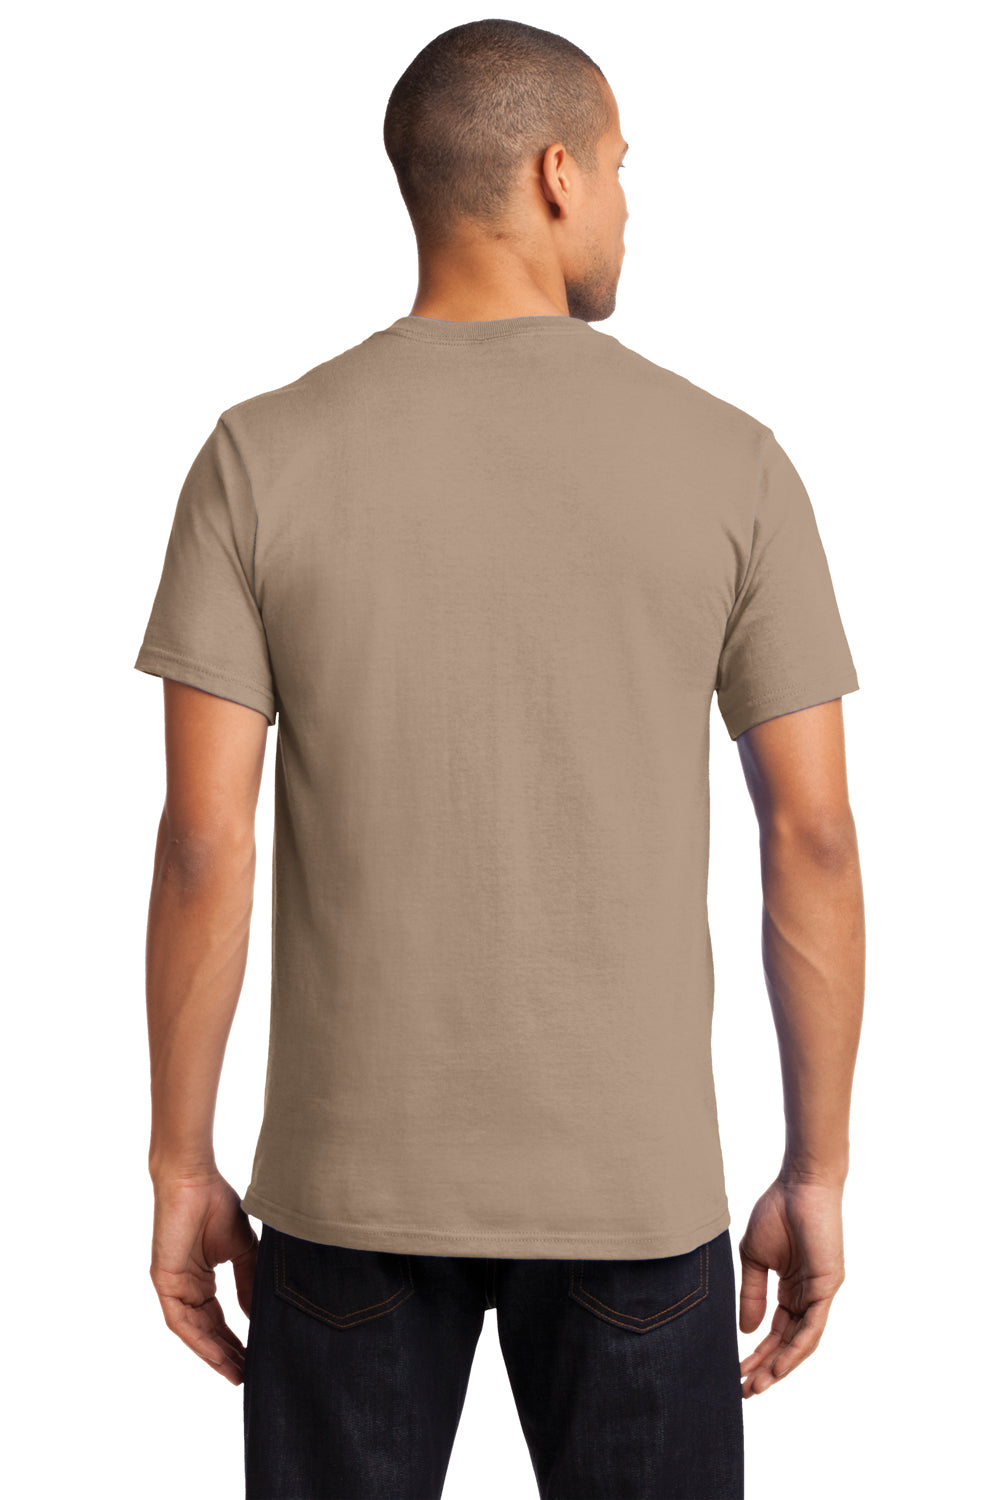 Port & Company PC61P Mens Essential Short Sleeve Crewneck T-Shirt w/ Pocket Sand Brown Back